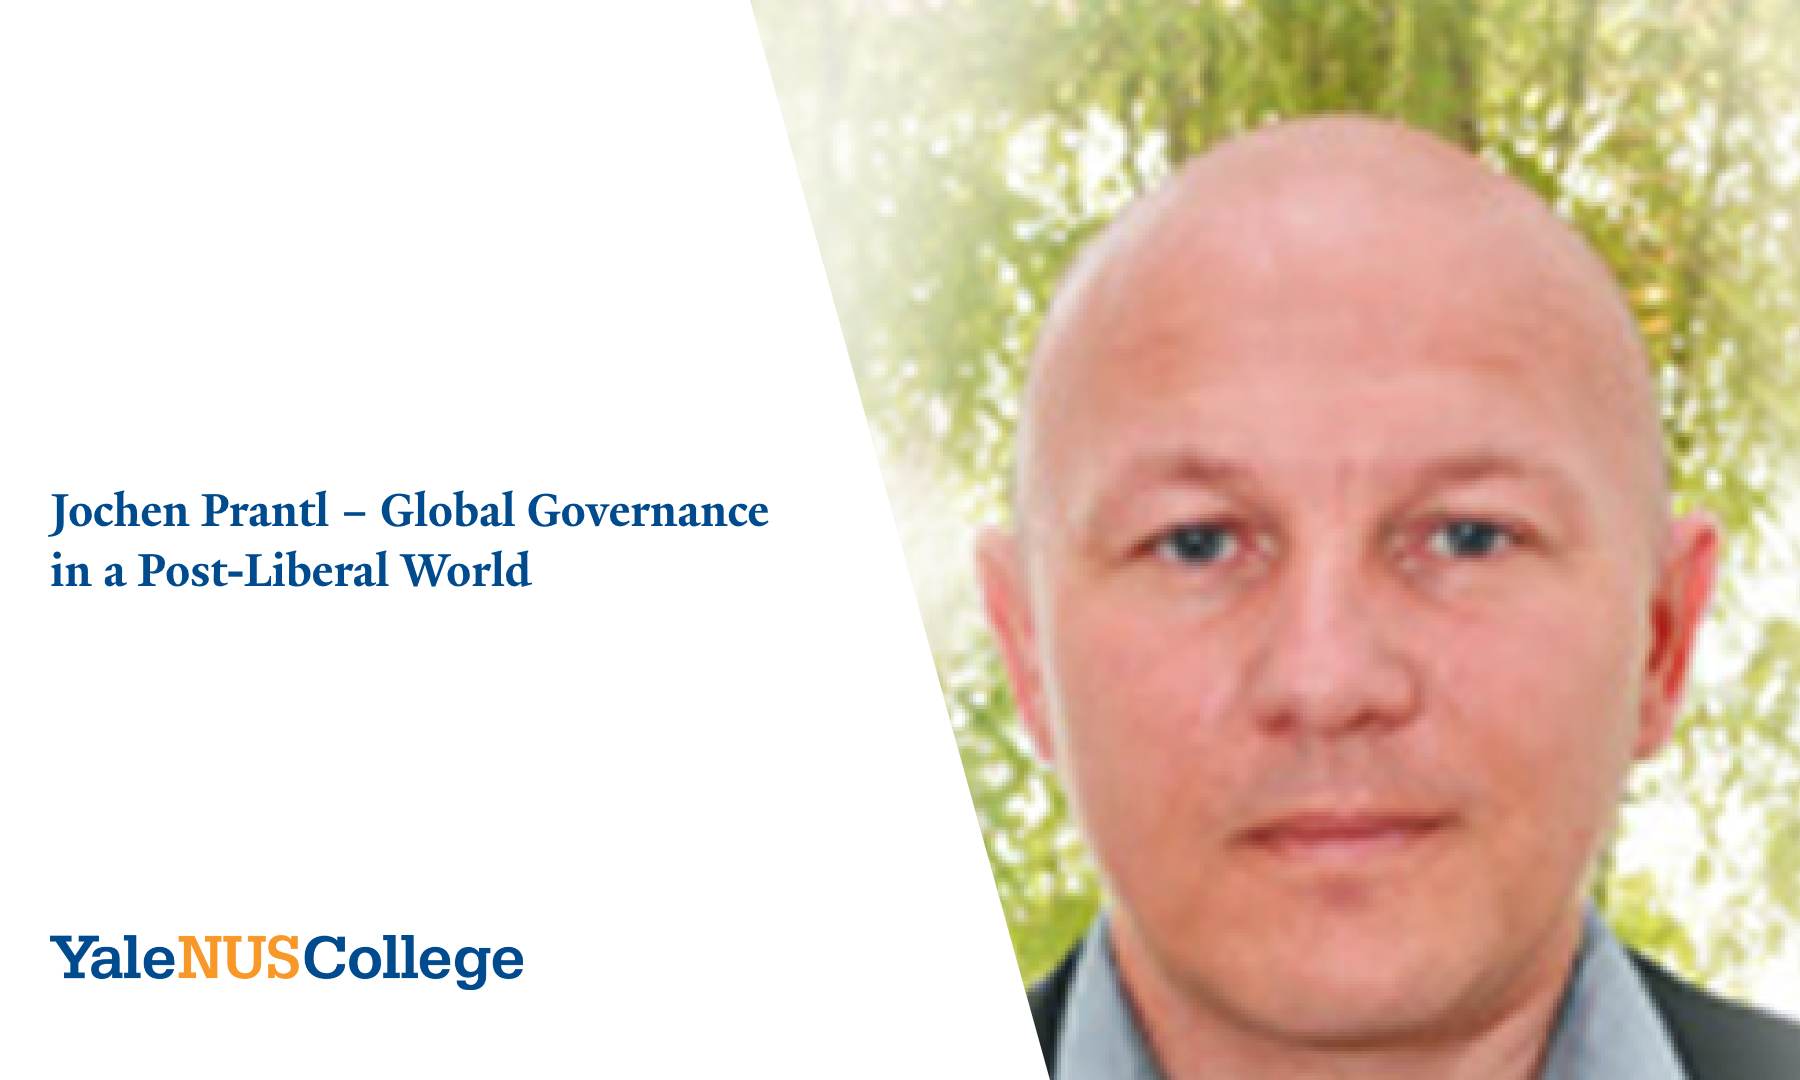 Jochen Prantl - Global Governance in a Post-Liberal World